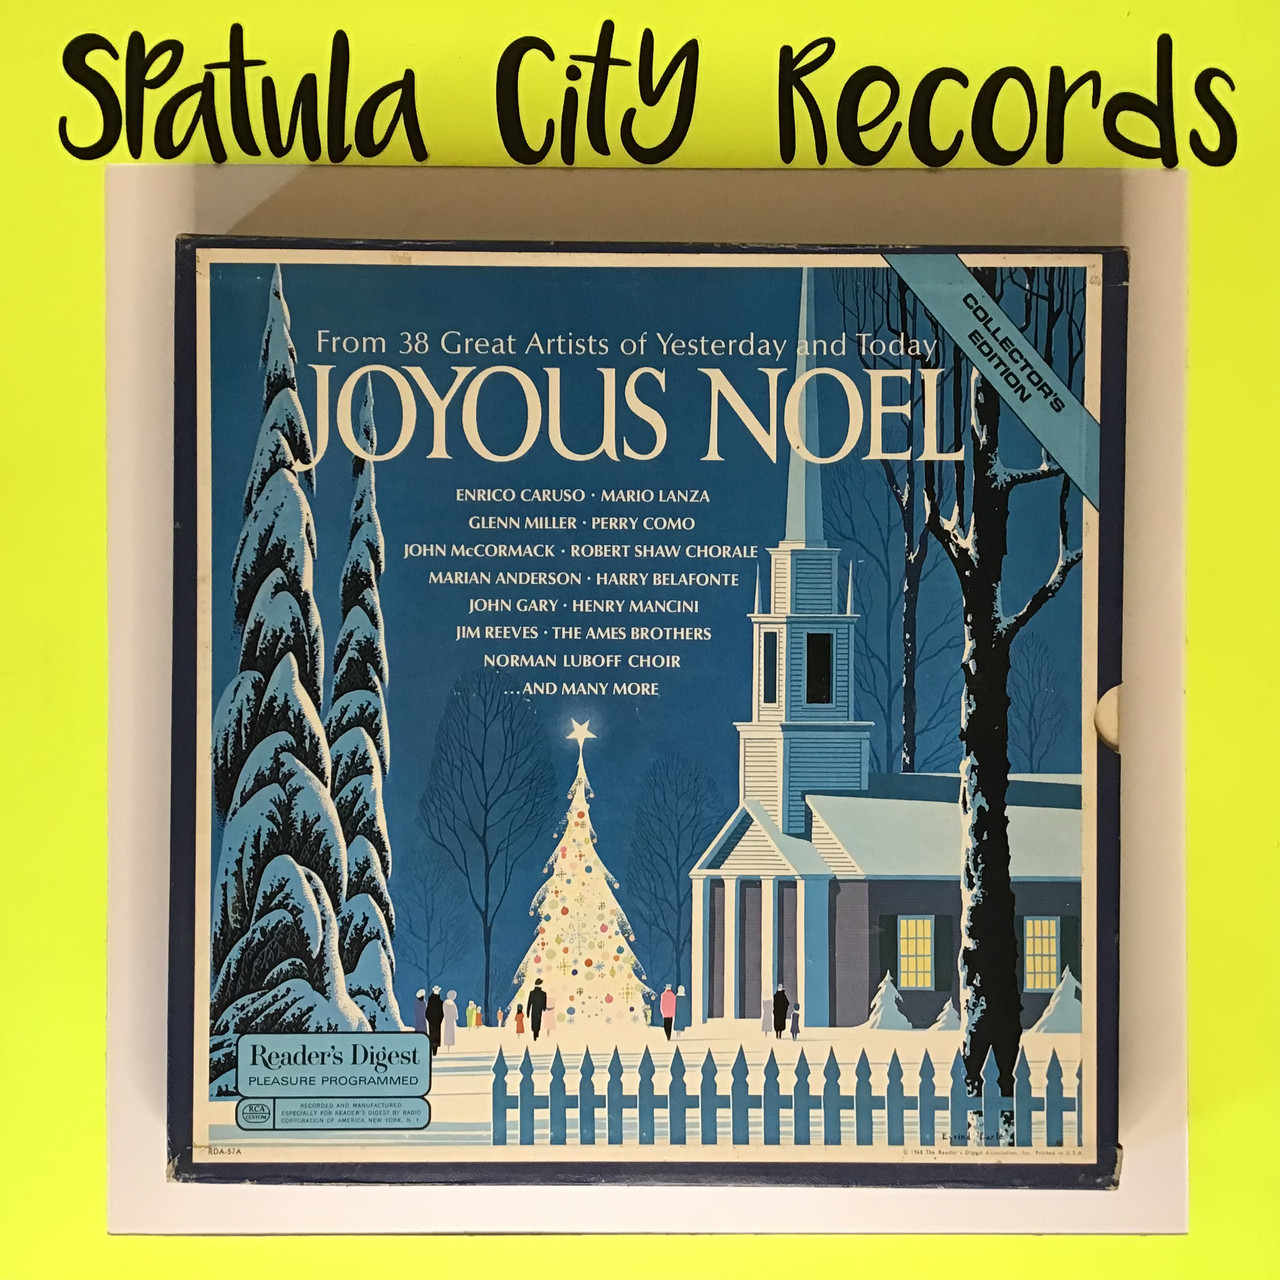 Readers Digest - Joyous Noel - MONO - four vinyl record album LP